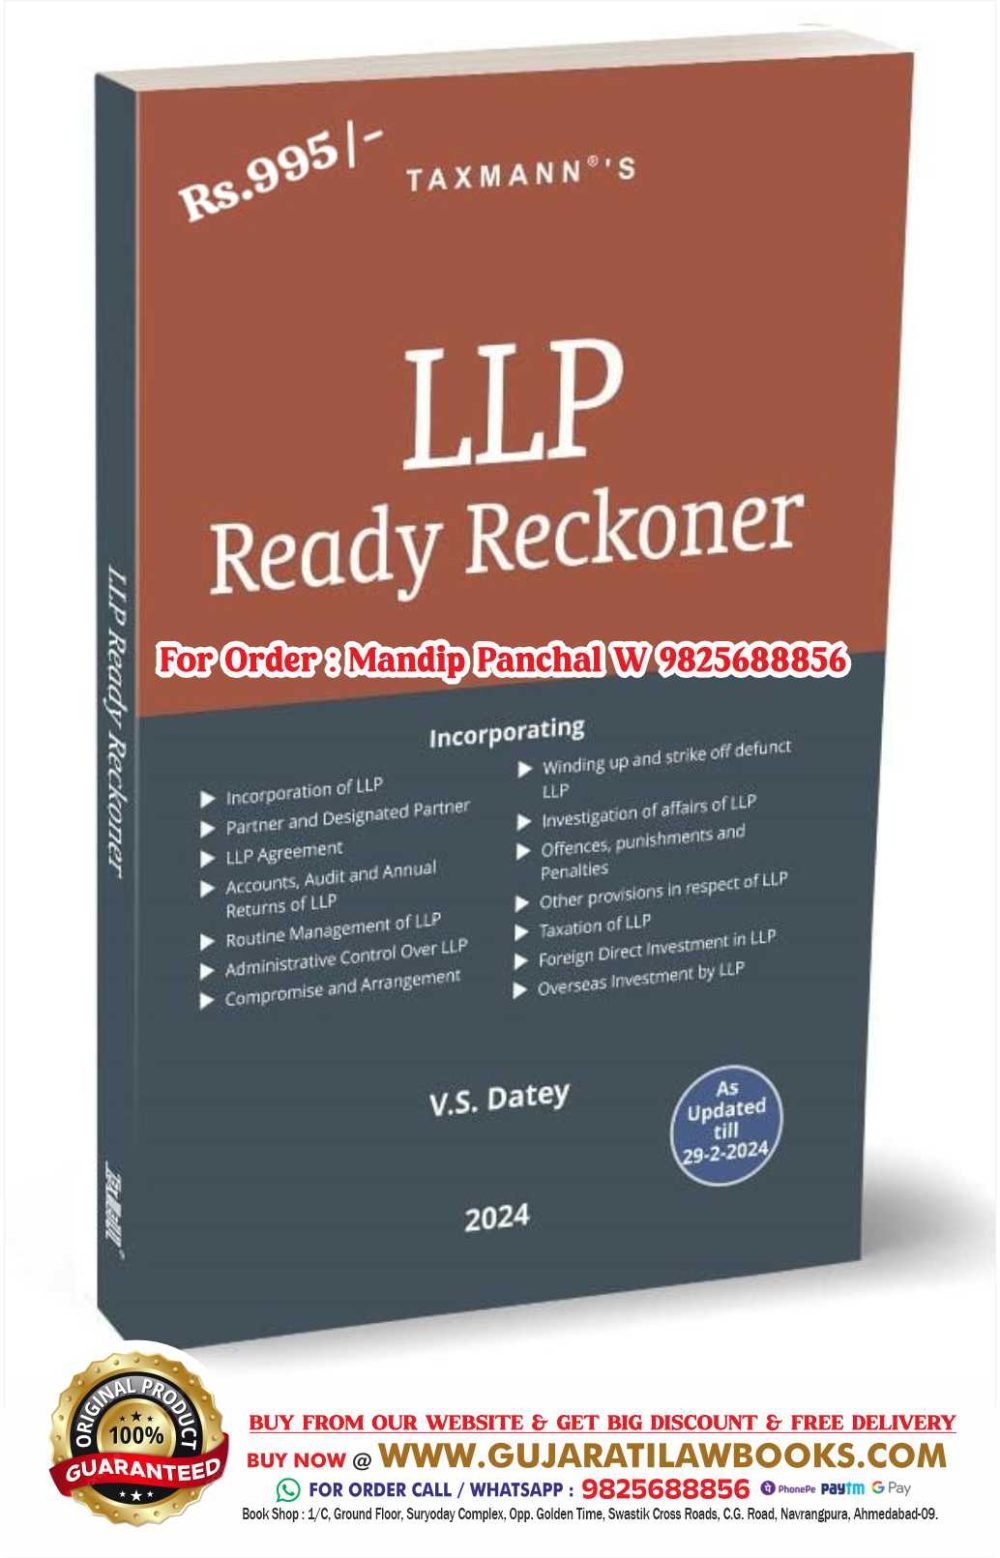 Taxmann's LLP Ready Reckoner - Latest March 2024 Edition